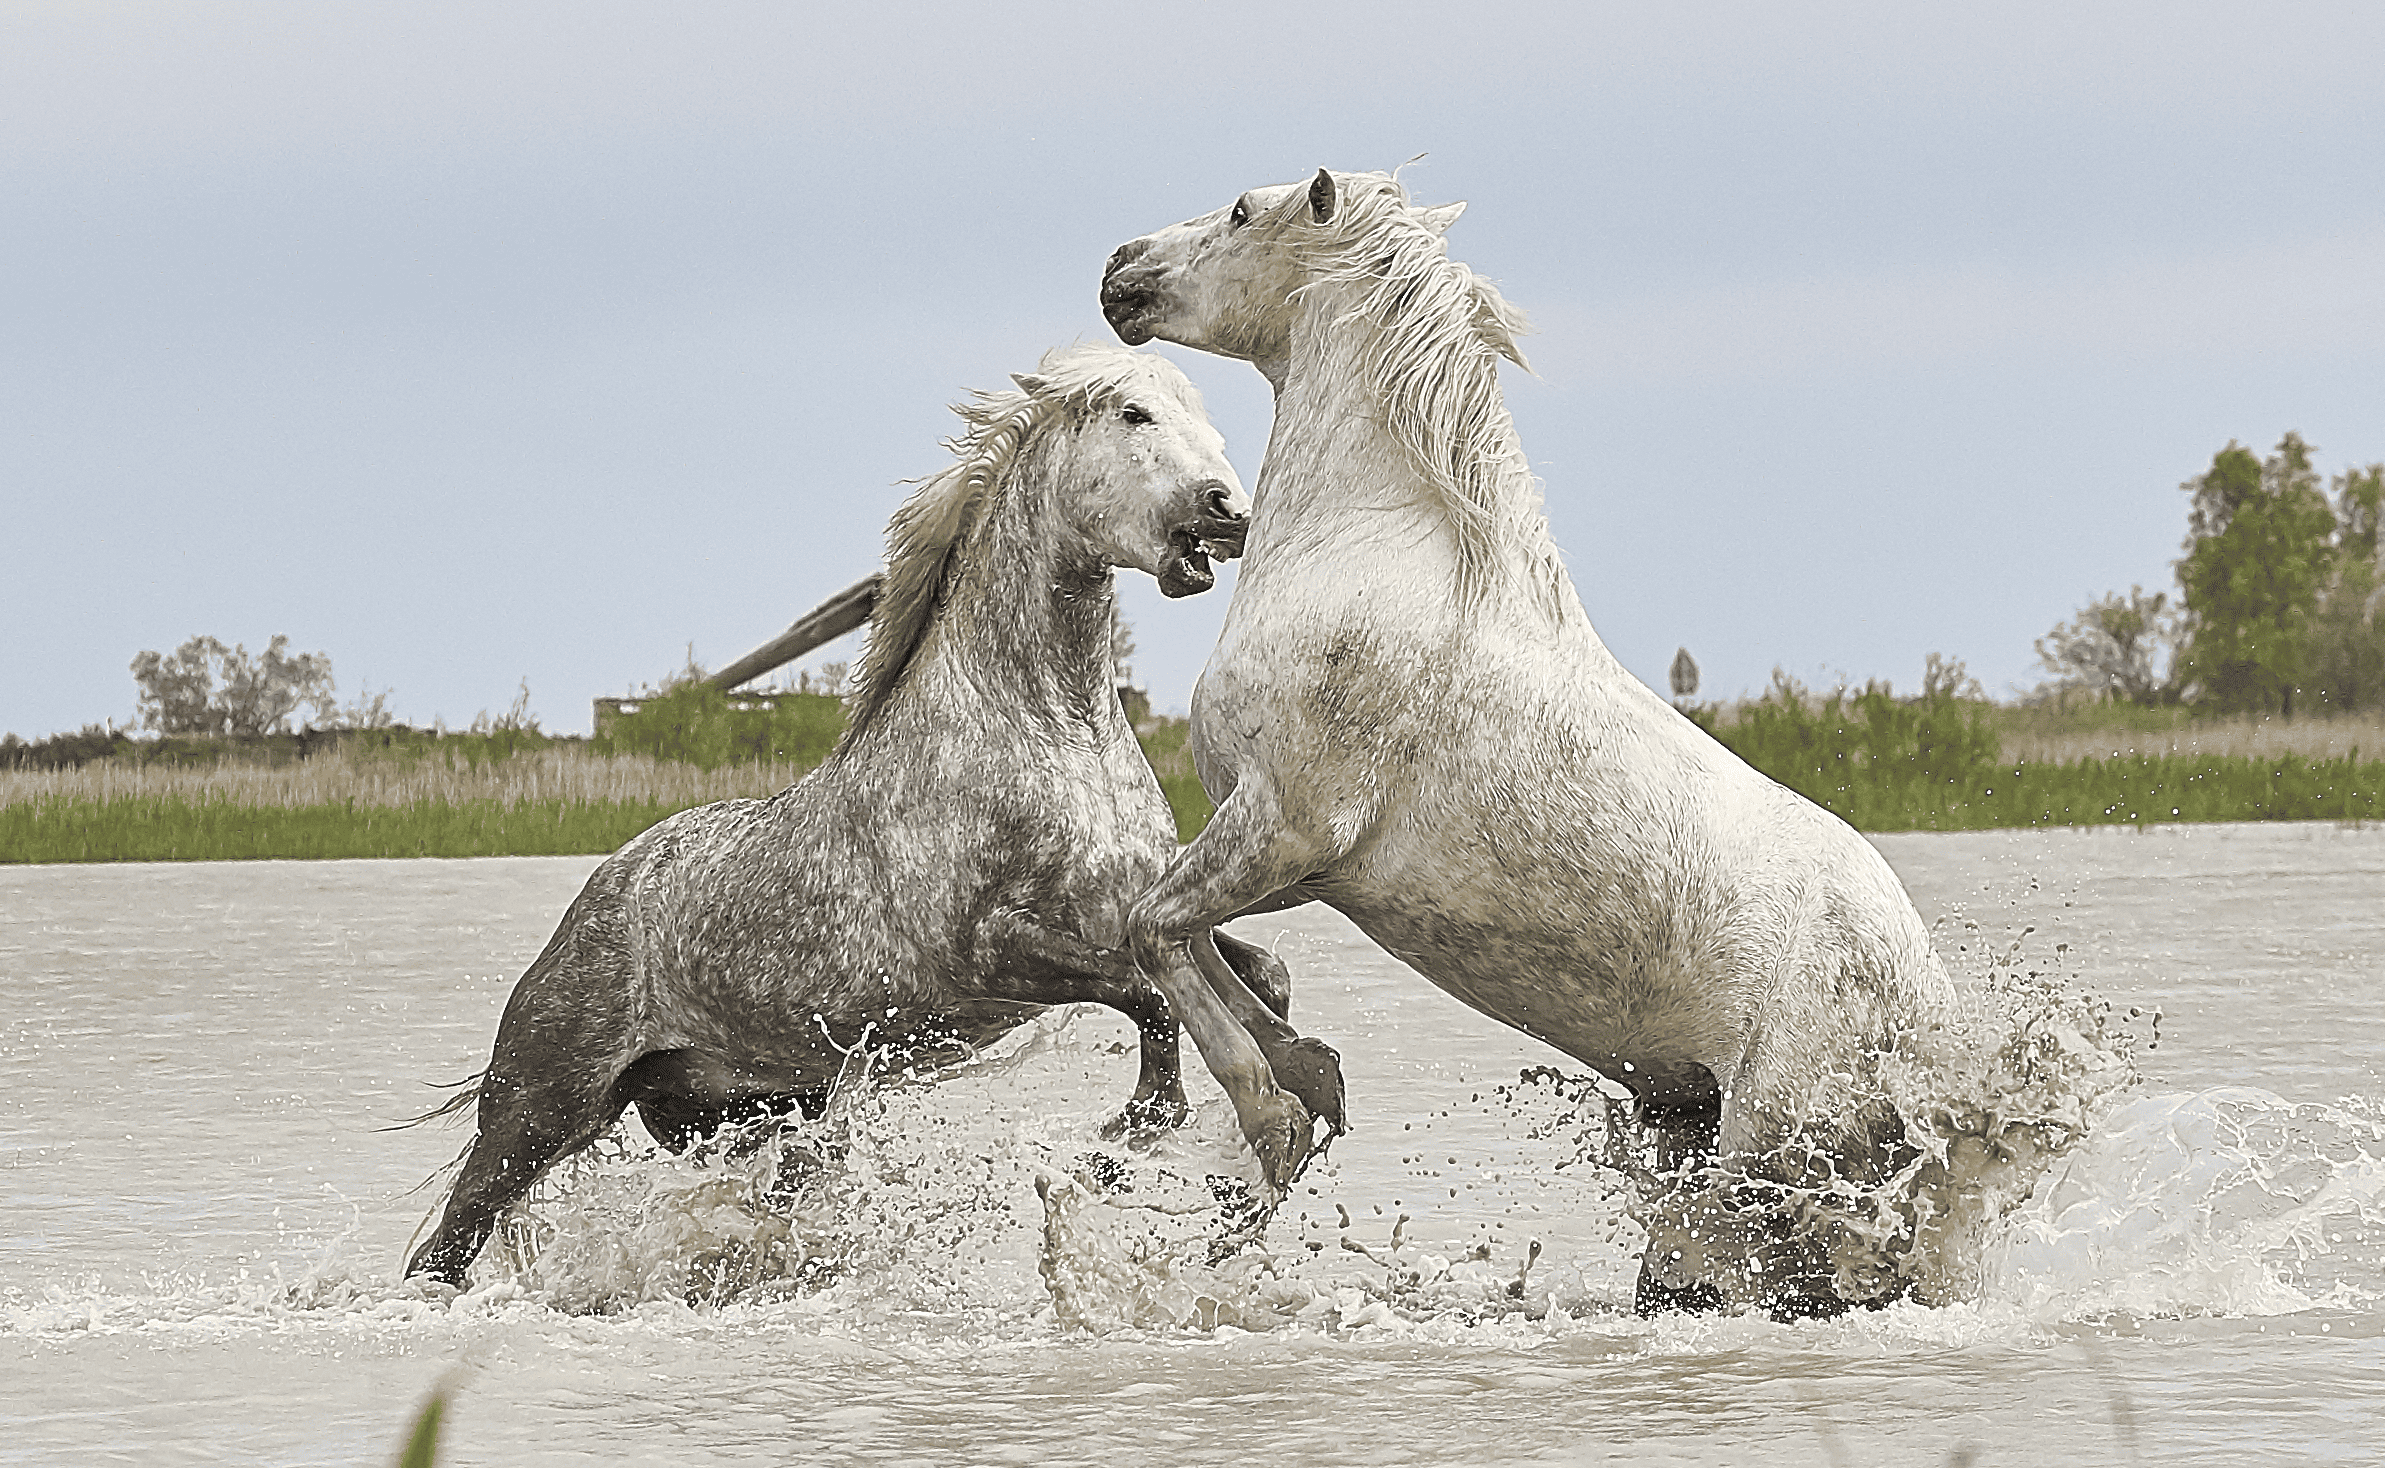 Horses fighting in water